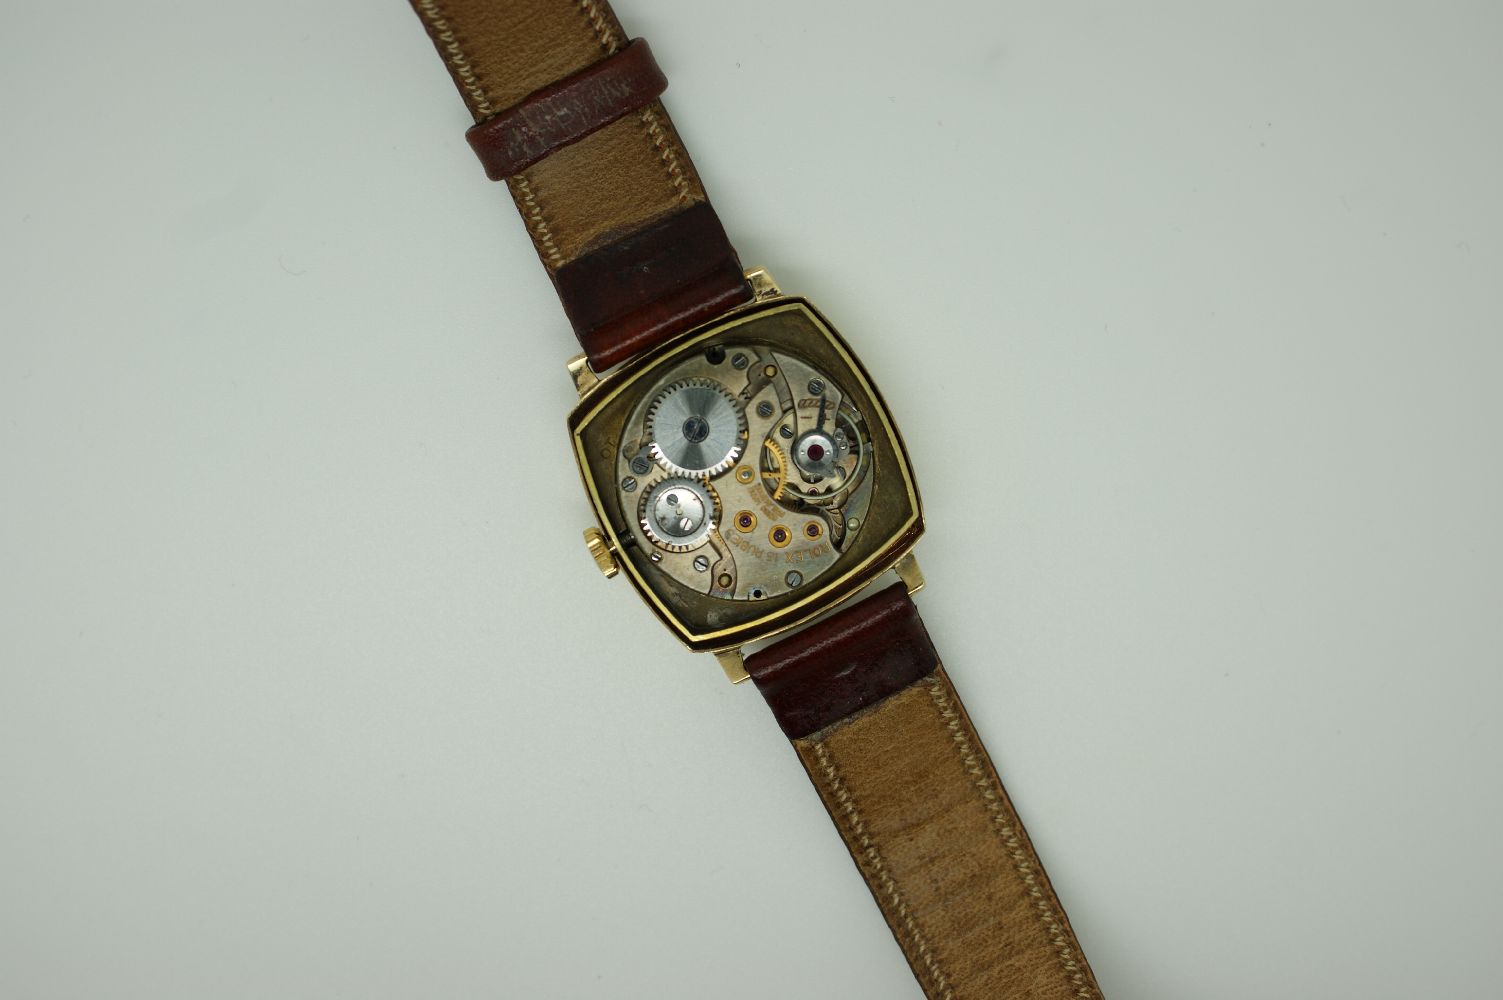 Rolex, ref. 2008, a 9 carat gold wrist watch - Image 2 of 2